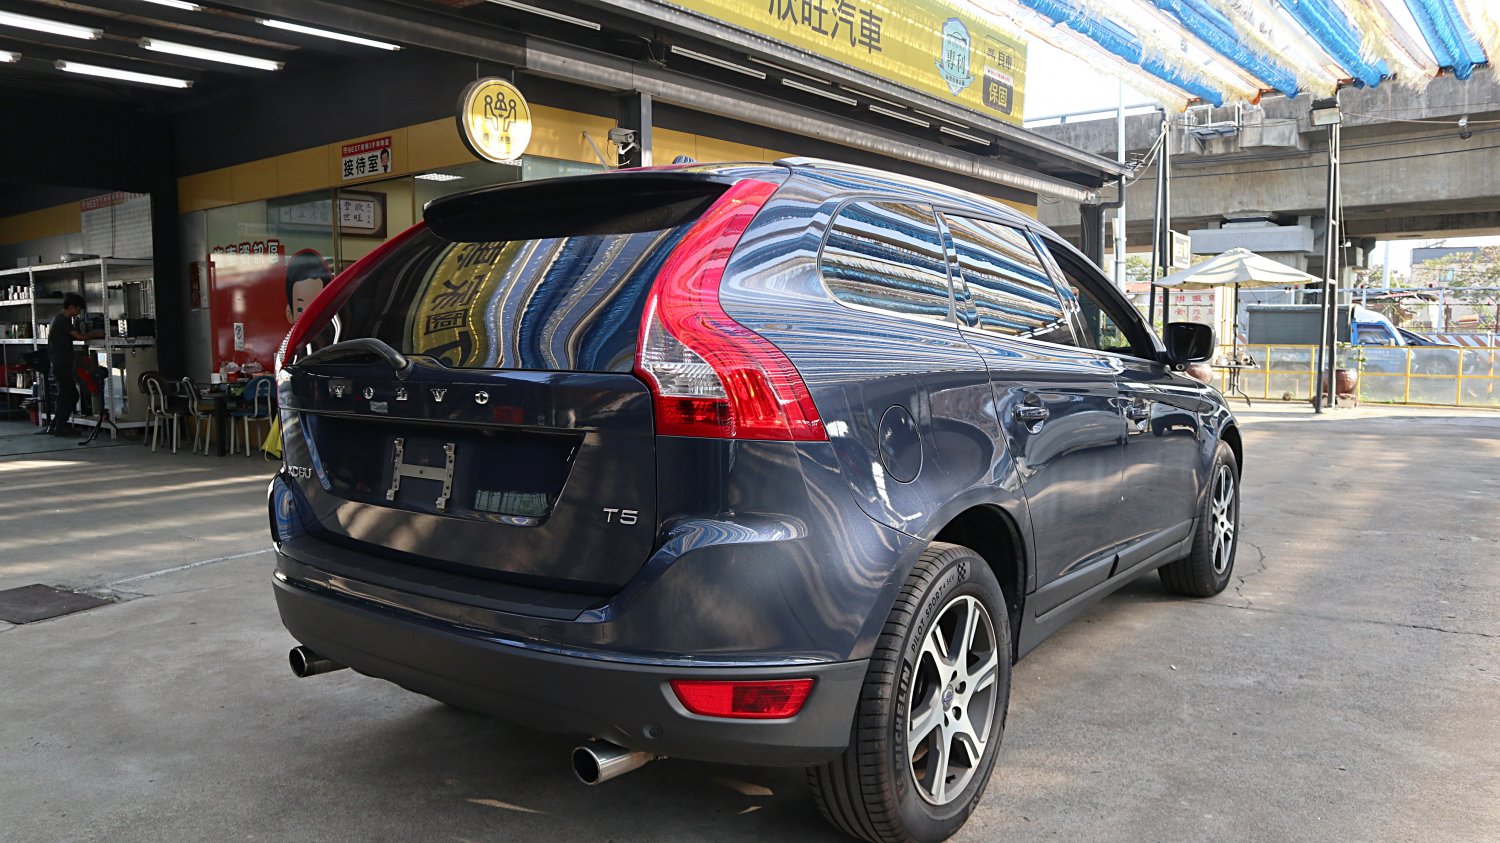 Volvo 富豪 ／ XC60 ／ 2012年 ／ 2012年VOLVO XC60 深藍色 富豪中古車 ／ 成交區